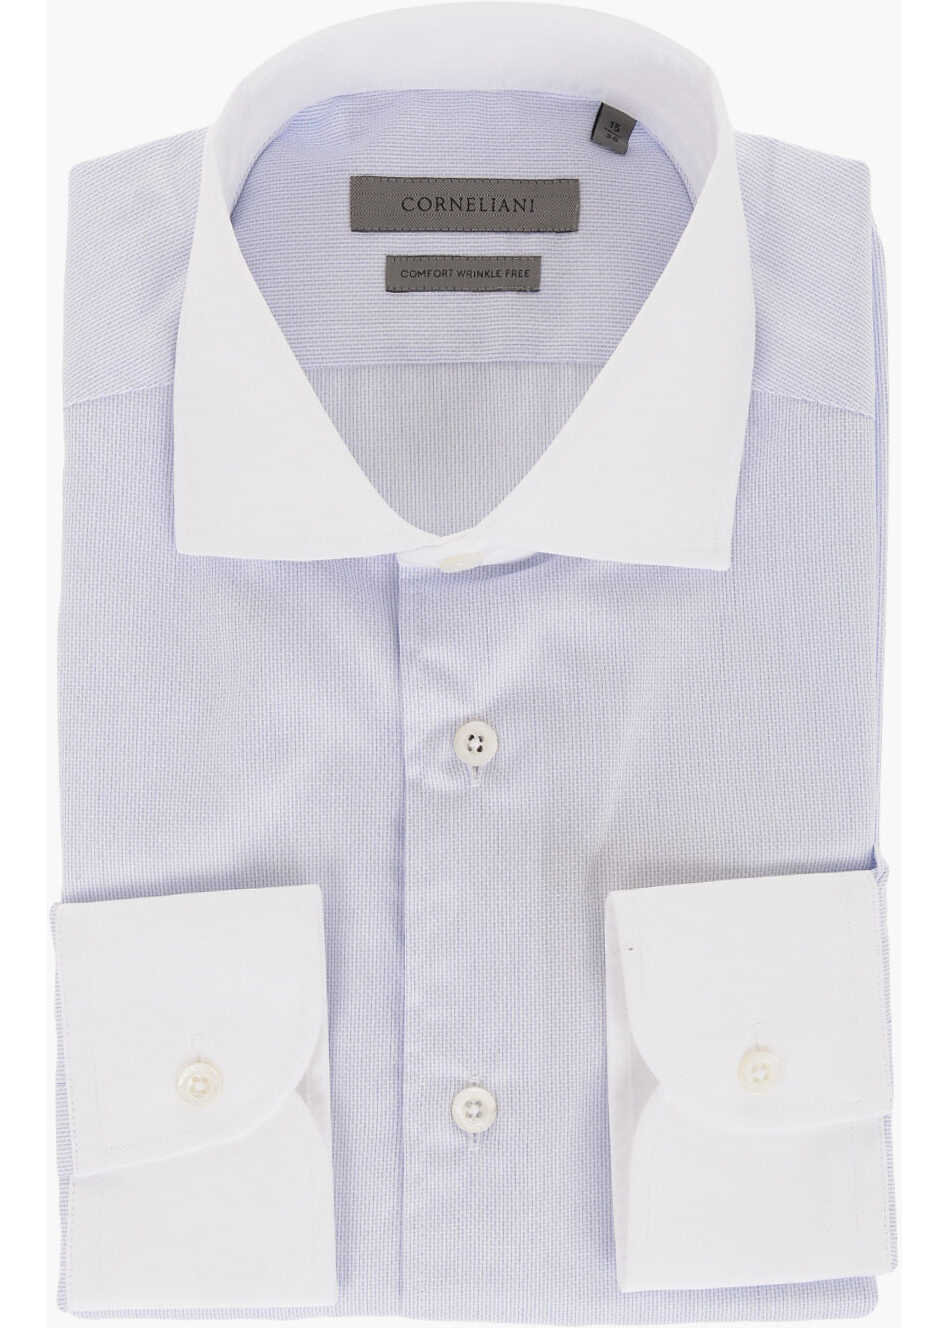 CORNELIANI Jacquard Cotton Shirt With Contrasting Collar And Cuffs Light Blue